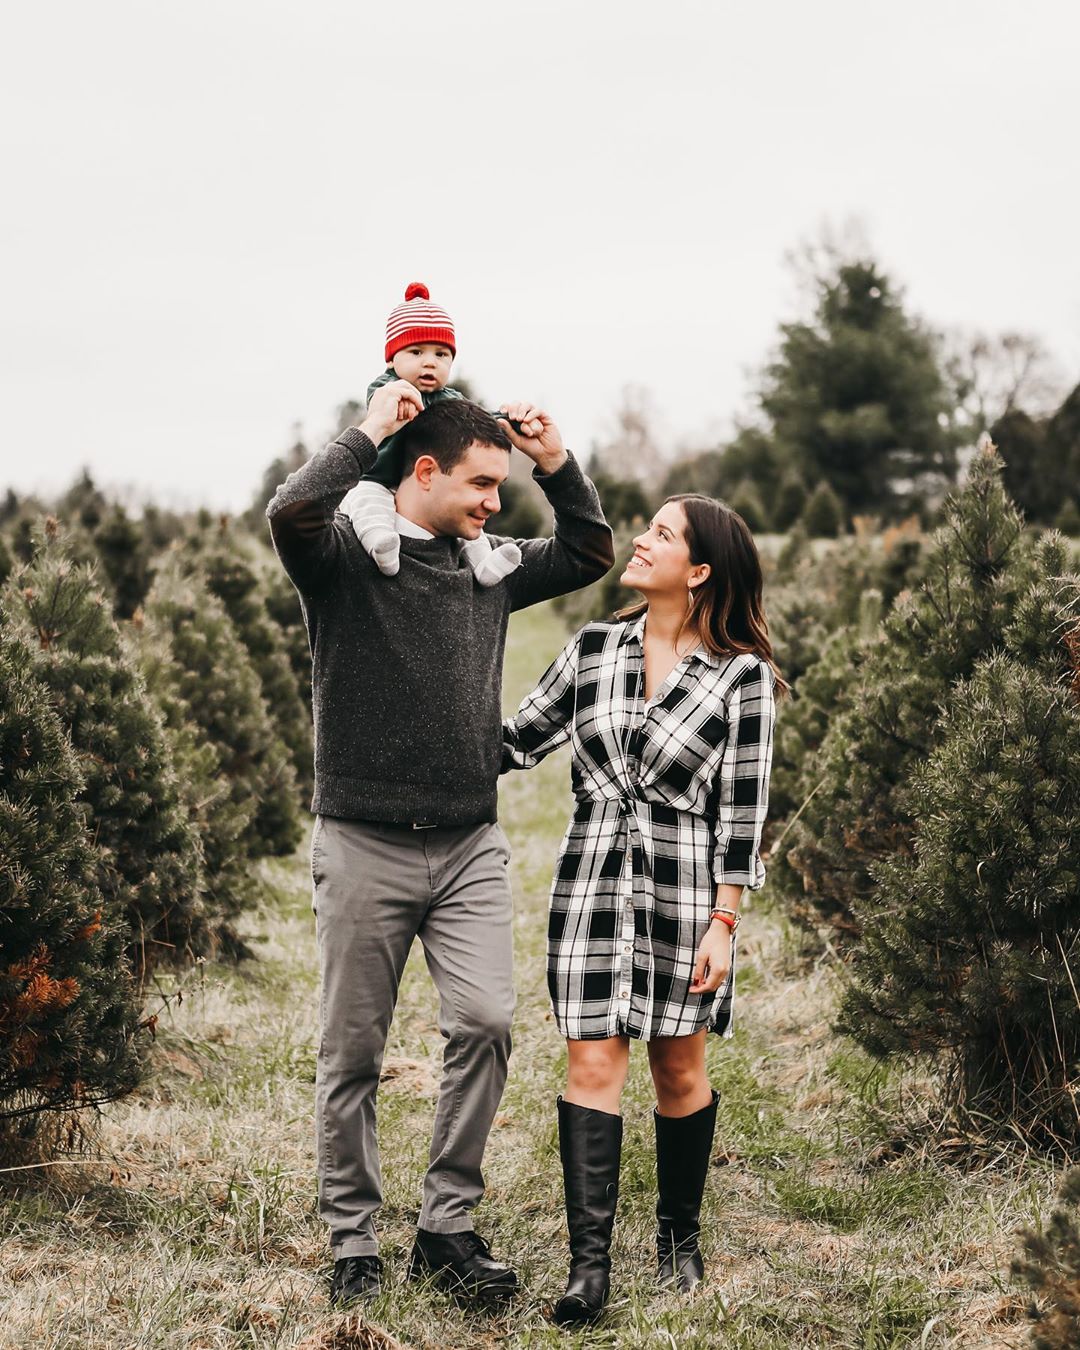 Young family strolls through holiday tree farm